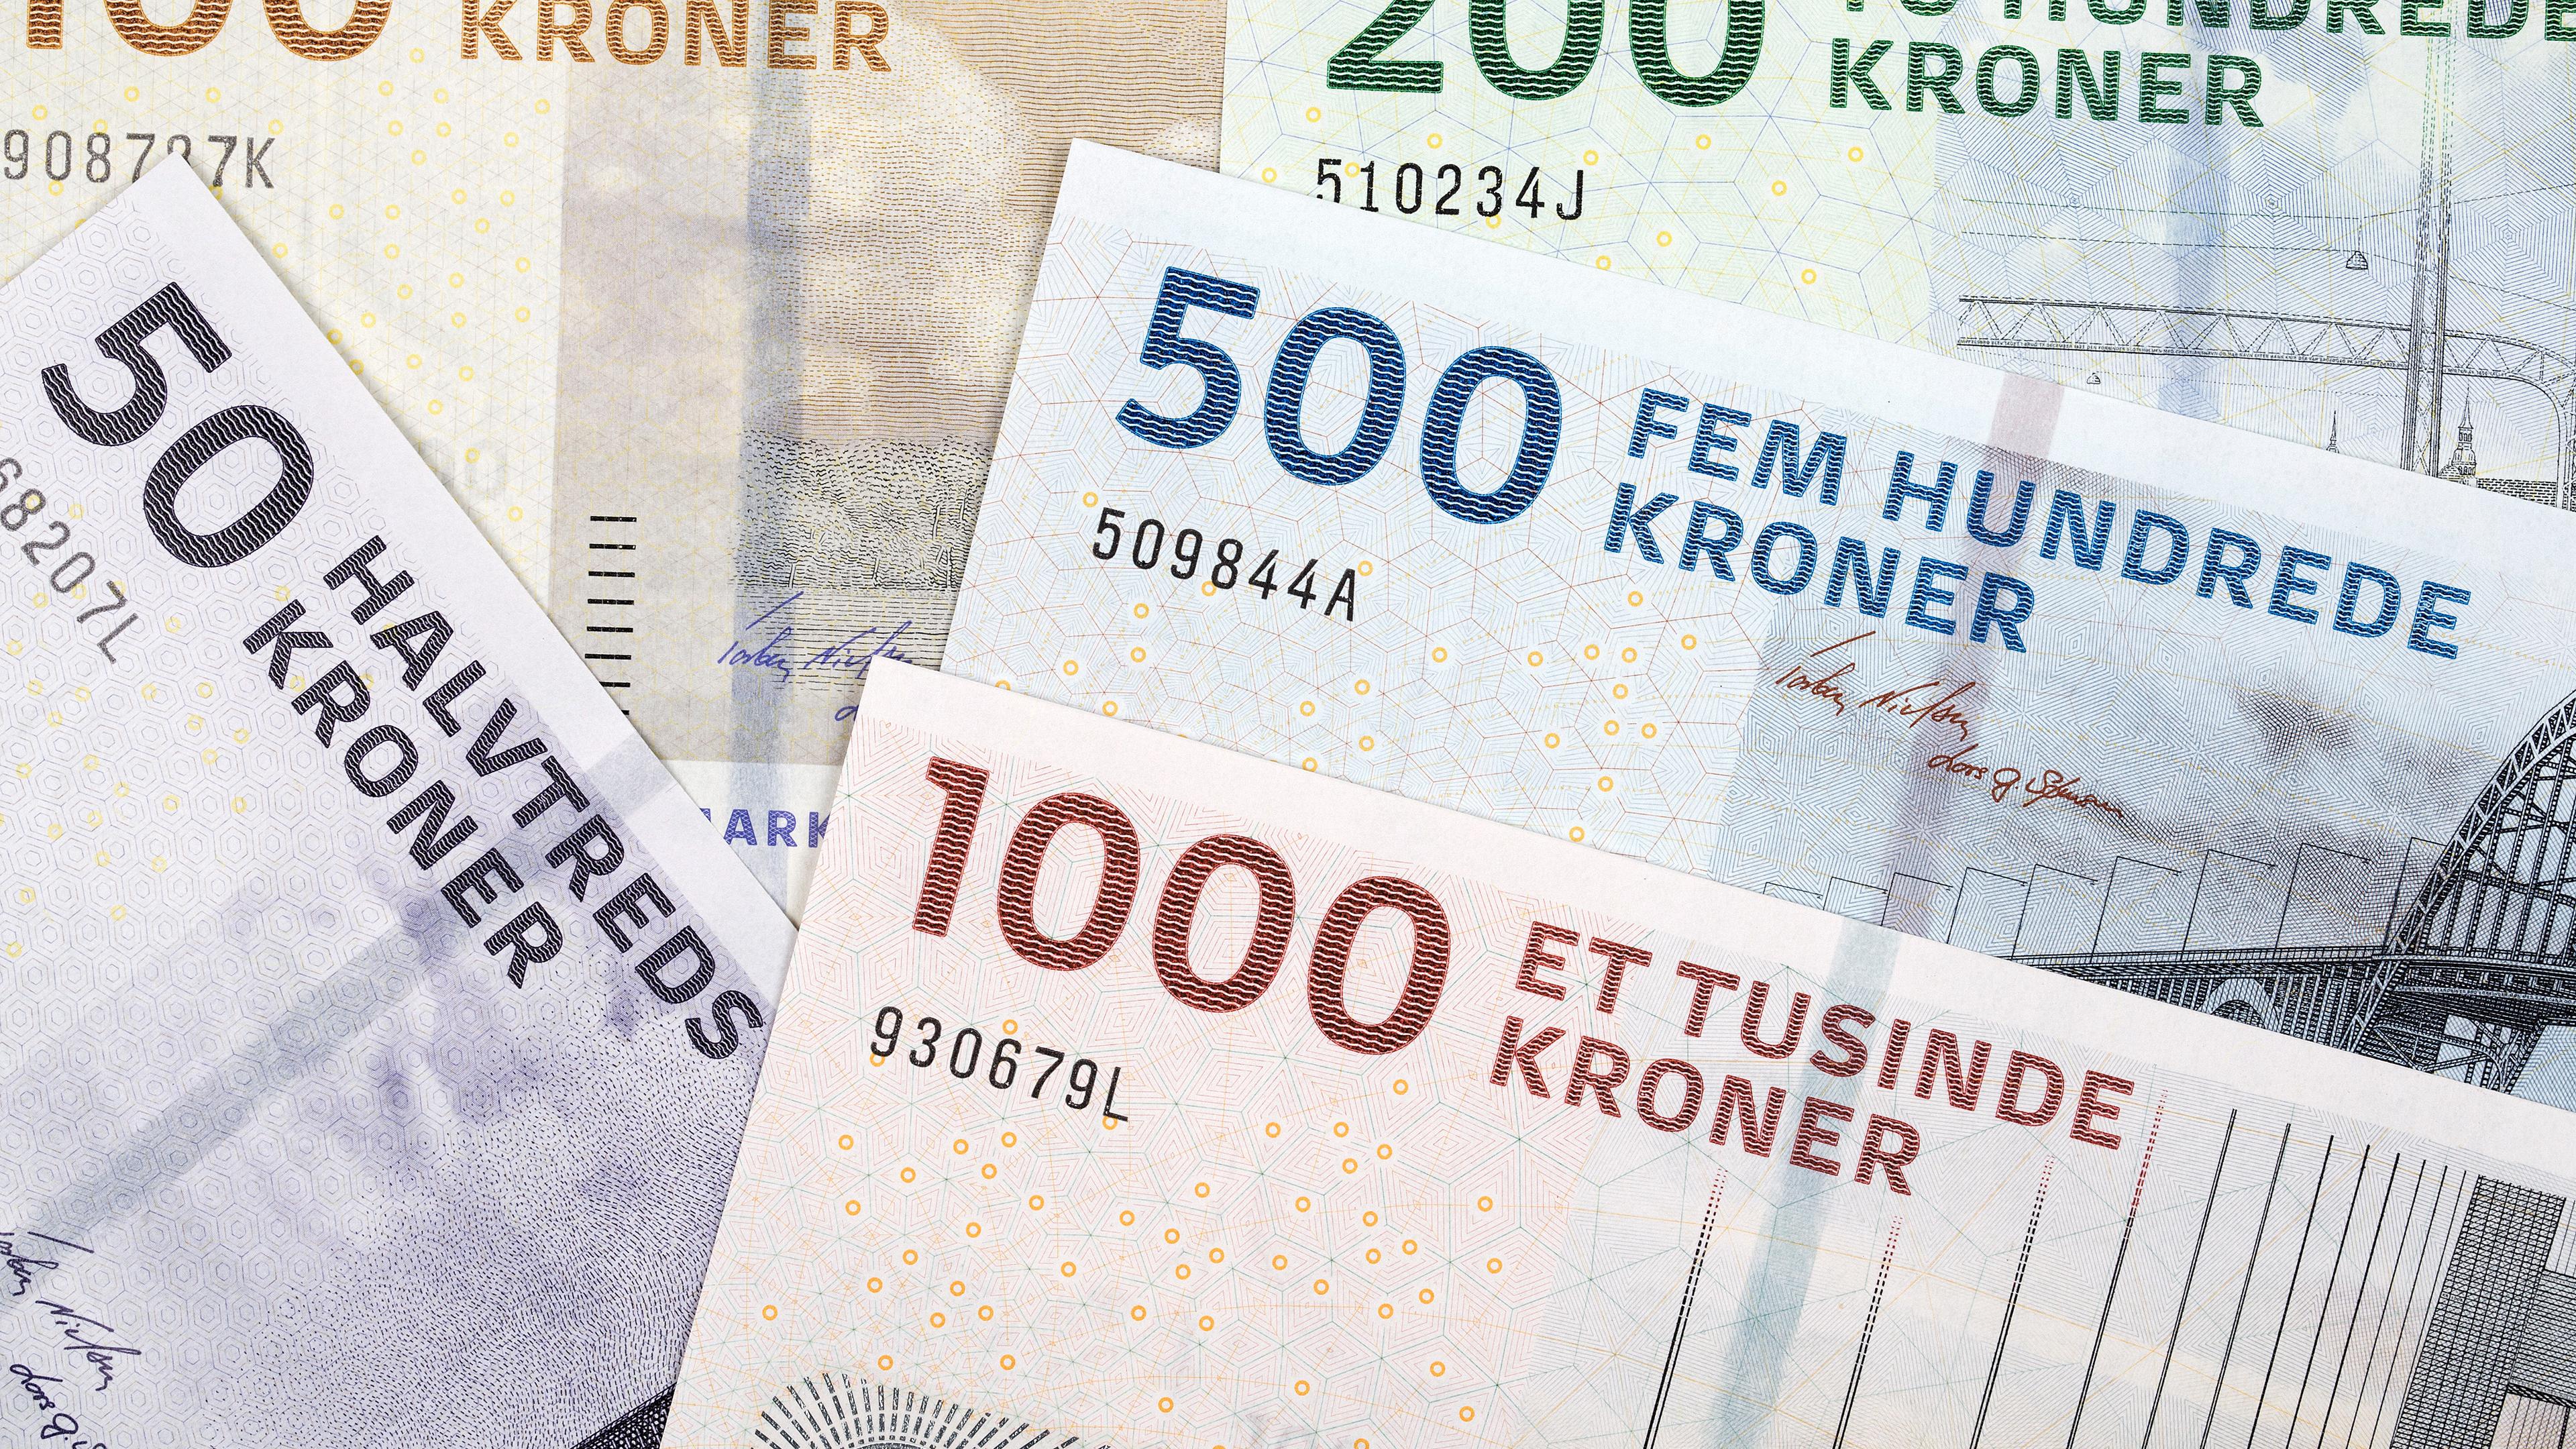 På billedet ses forskellige danske pengesedler. Der er sedler med 100, 200, 500 og 1000 kr.